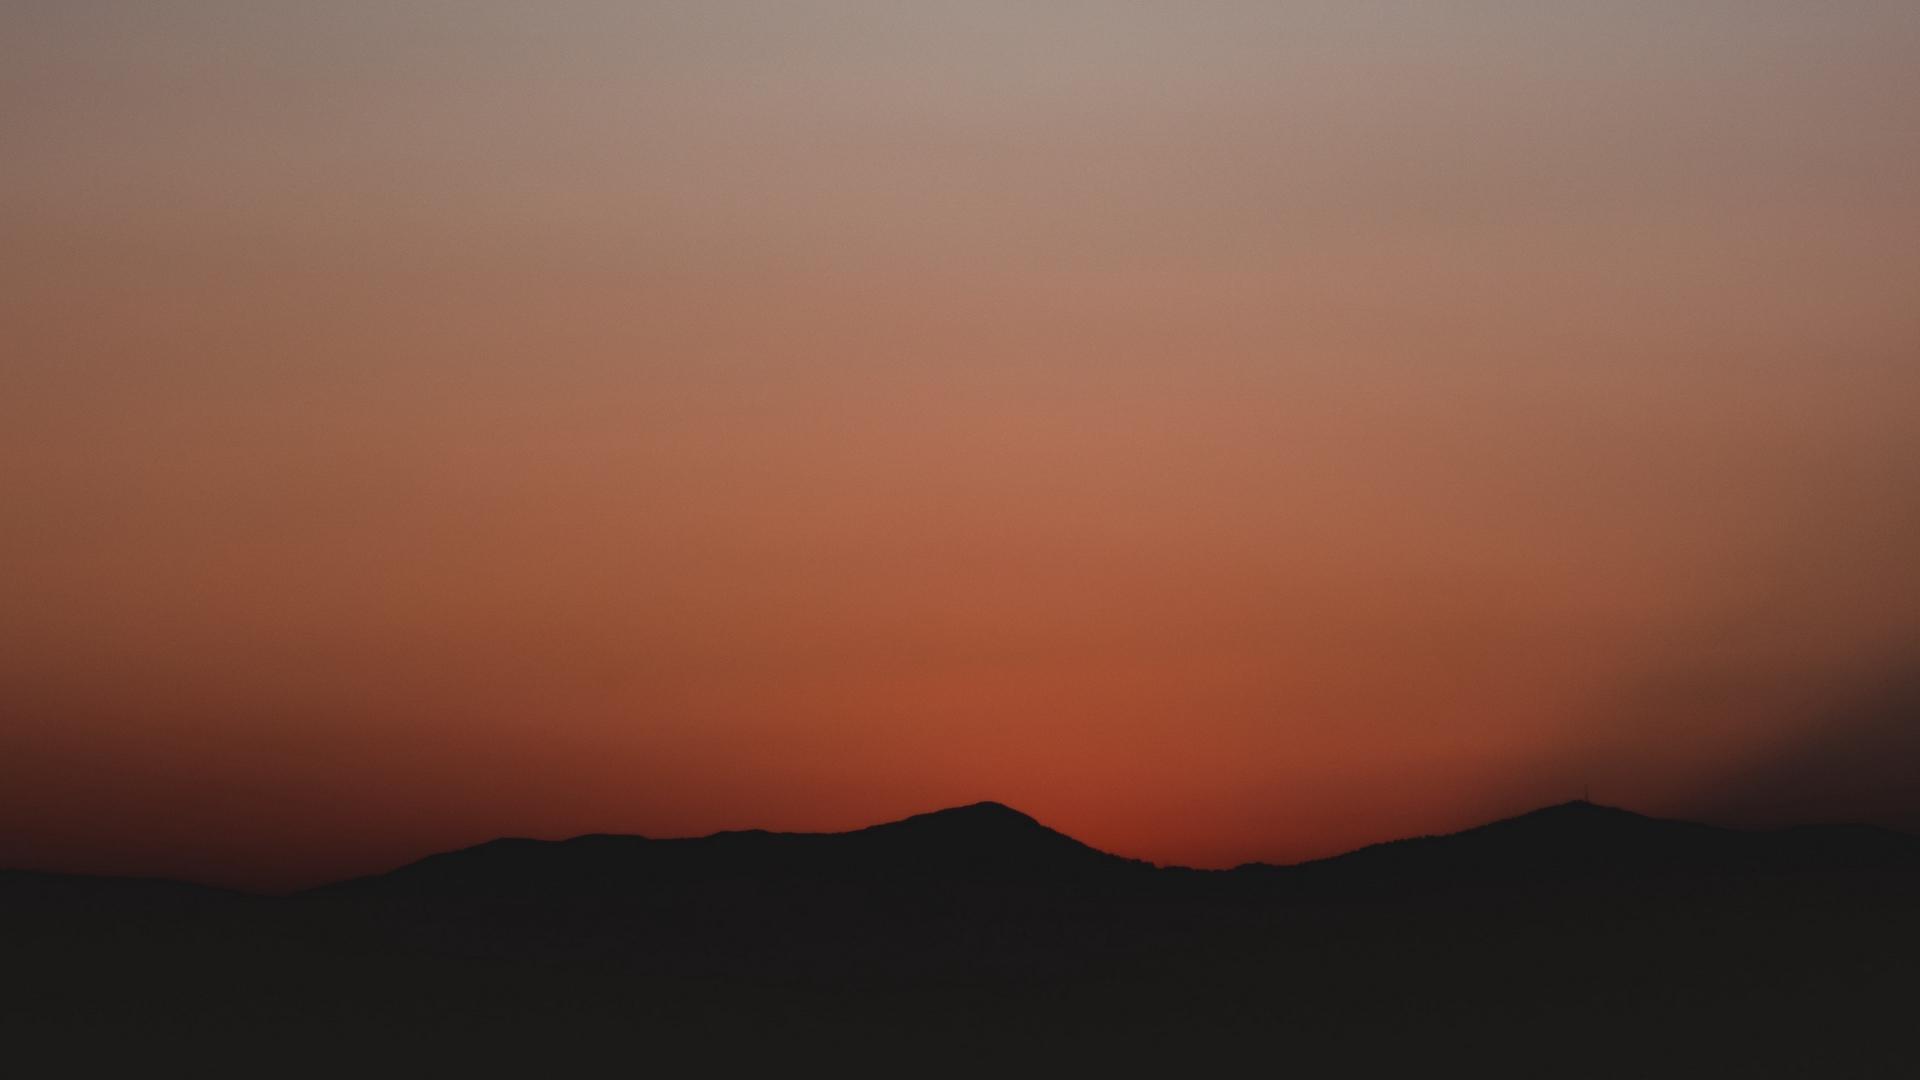 Download wallpaper 1920x1080 mountains, sky, gradient, dark, sunset